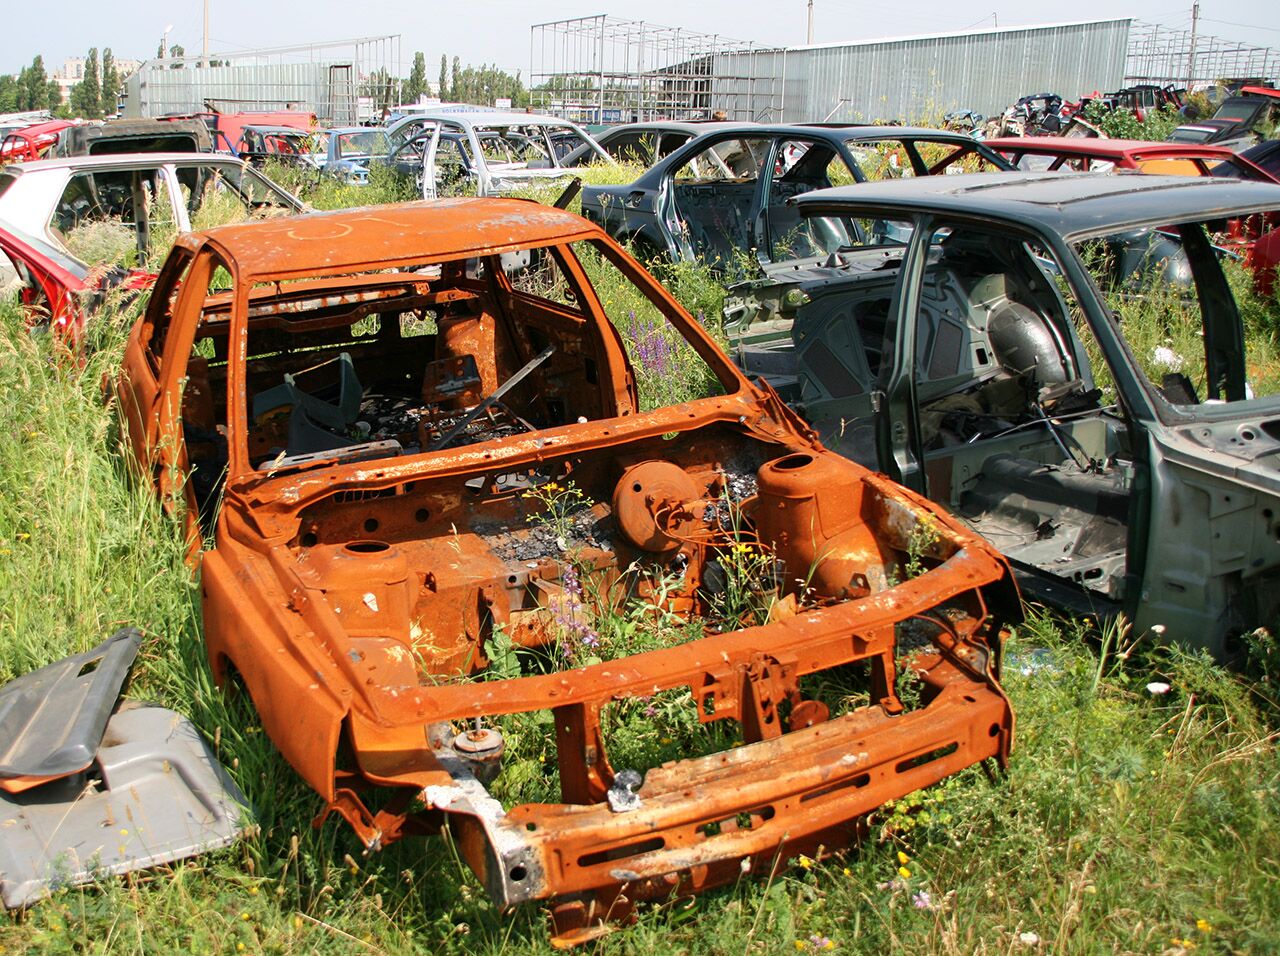 Rusted Car Frame in Wrecker Yard